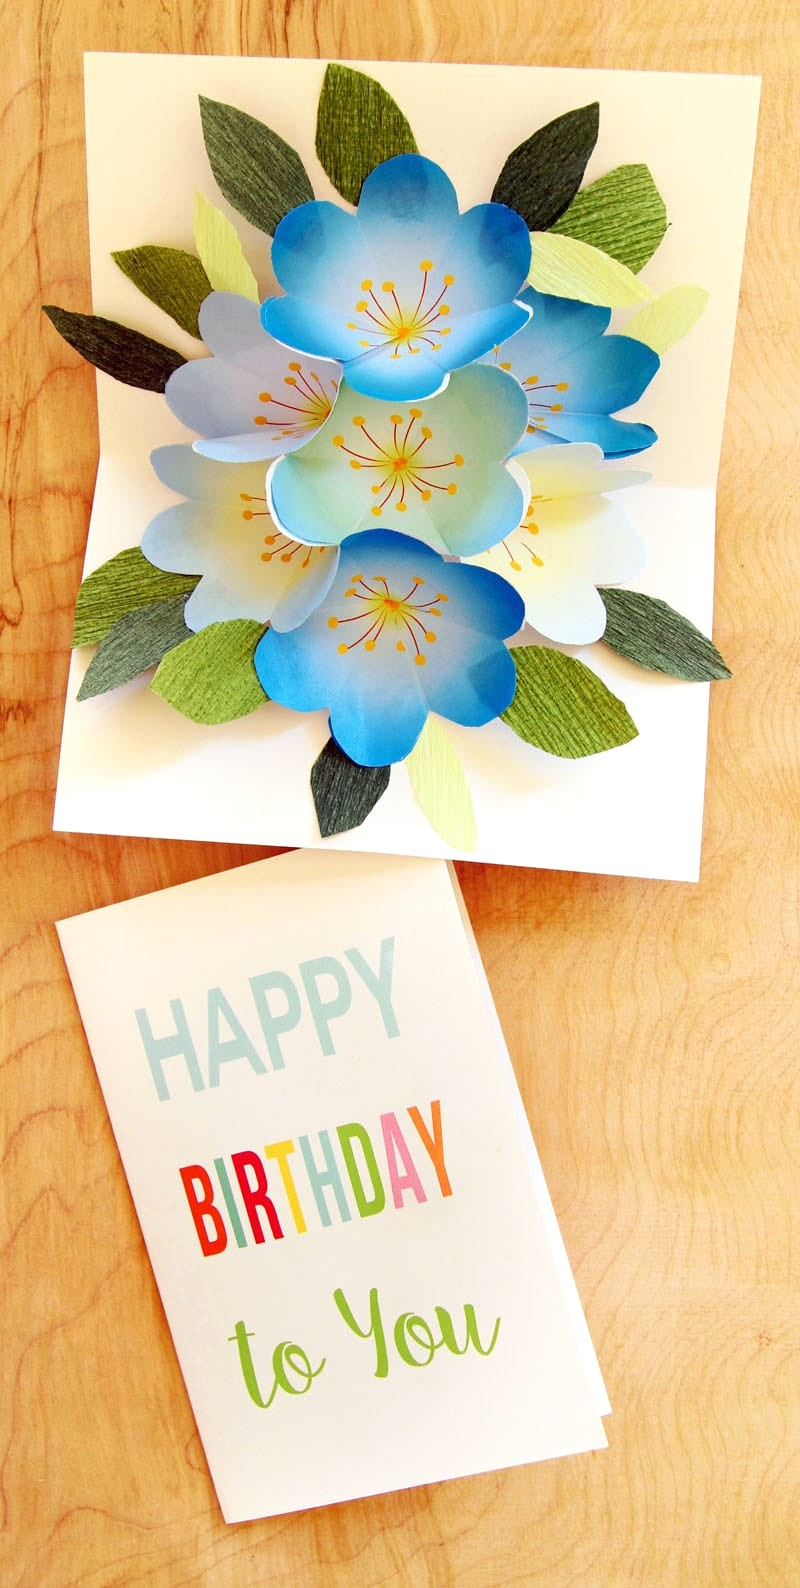 Easy Diy Free Printable Happy Birthday Card Greeting Pop Up Bouquet - Free Printable Happy Birthday Cards For Dad